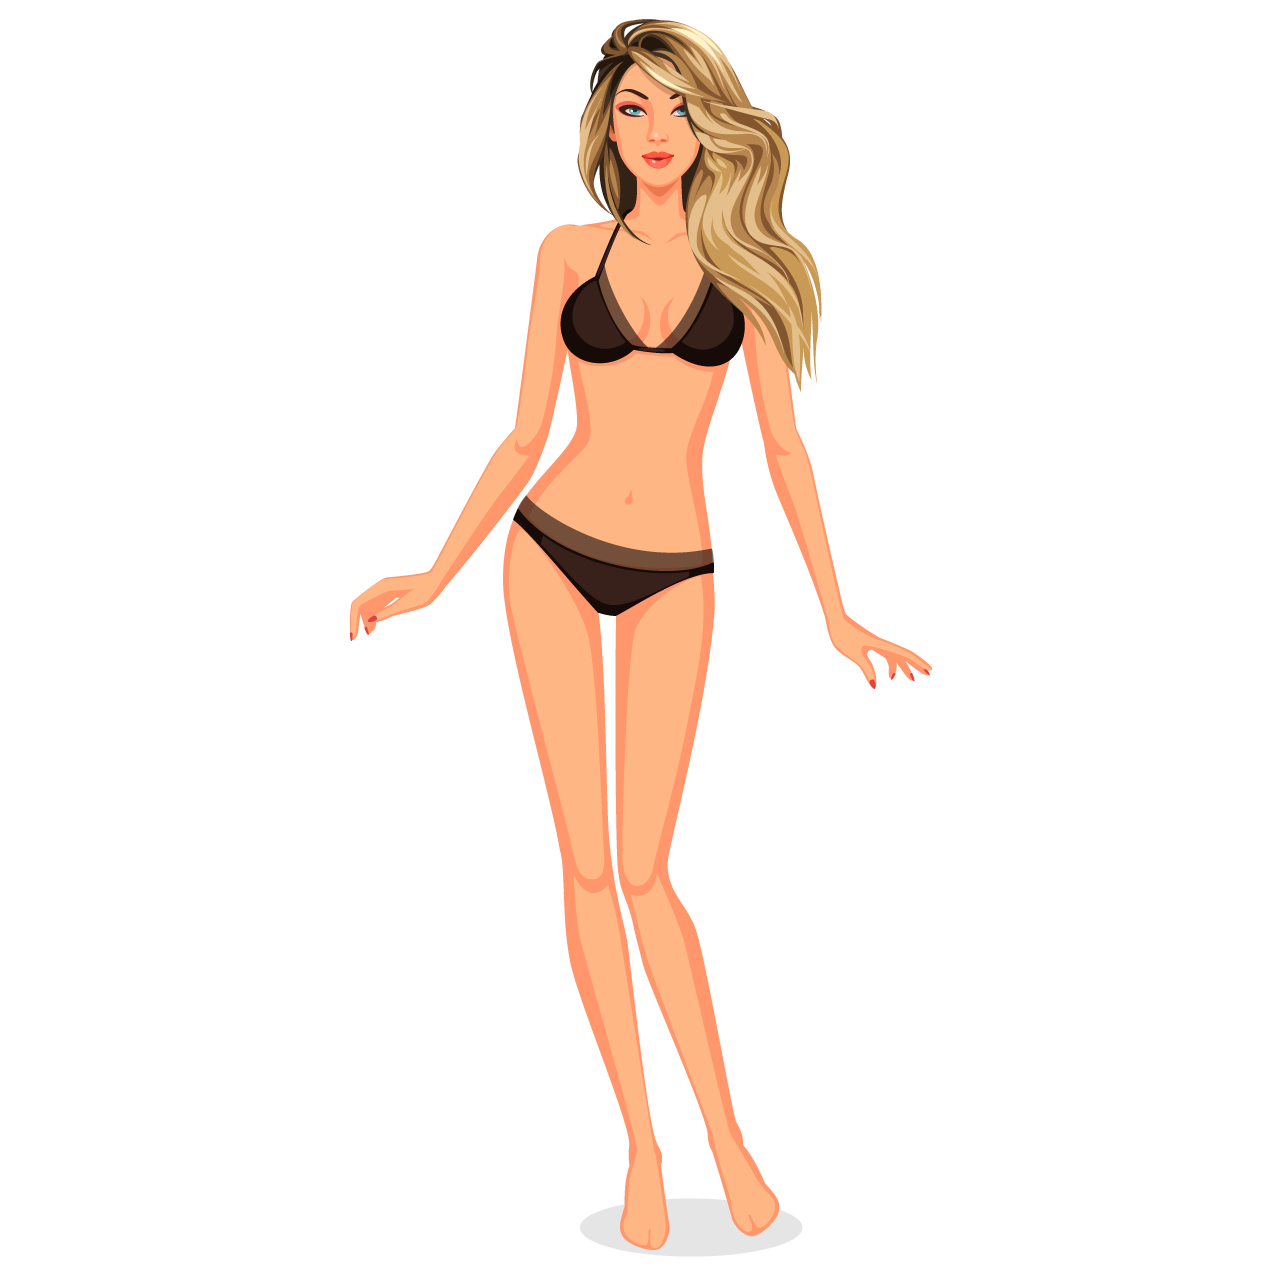 Bikini clipart stylish beautiful model standing with cool blonde hair